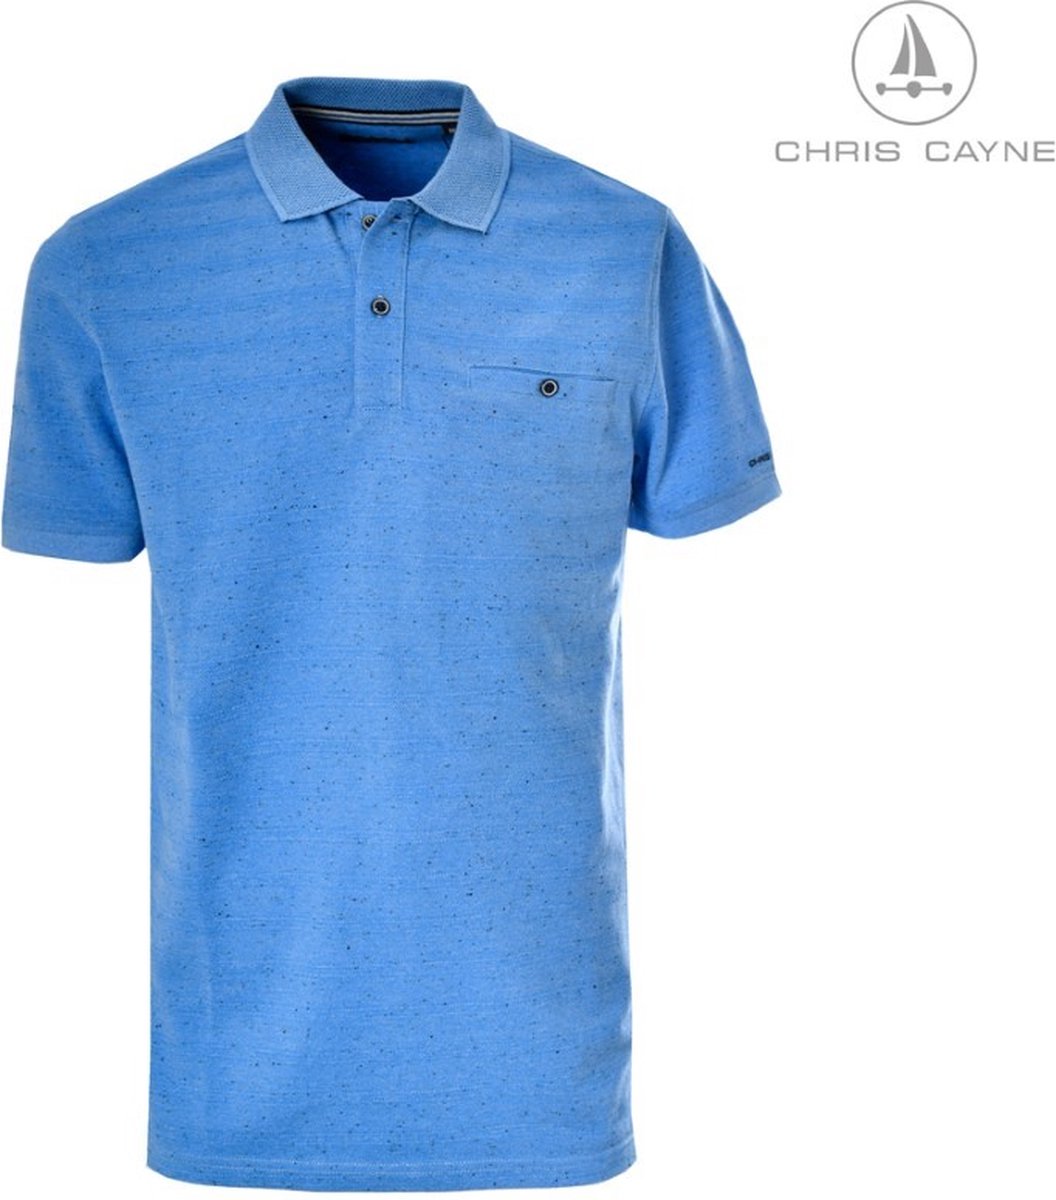 Chris Cayne heren poloshirt - polo heren - 3078 - blauw - korte mouwen - maat 3XL